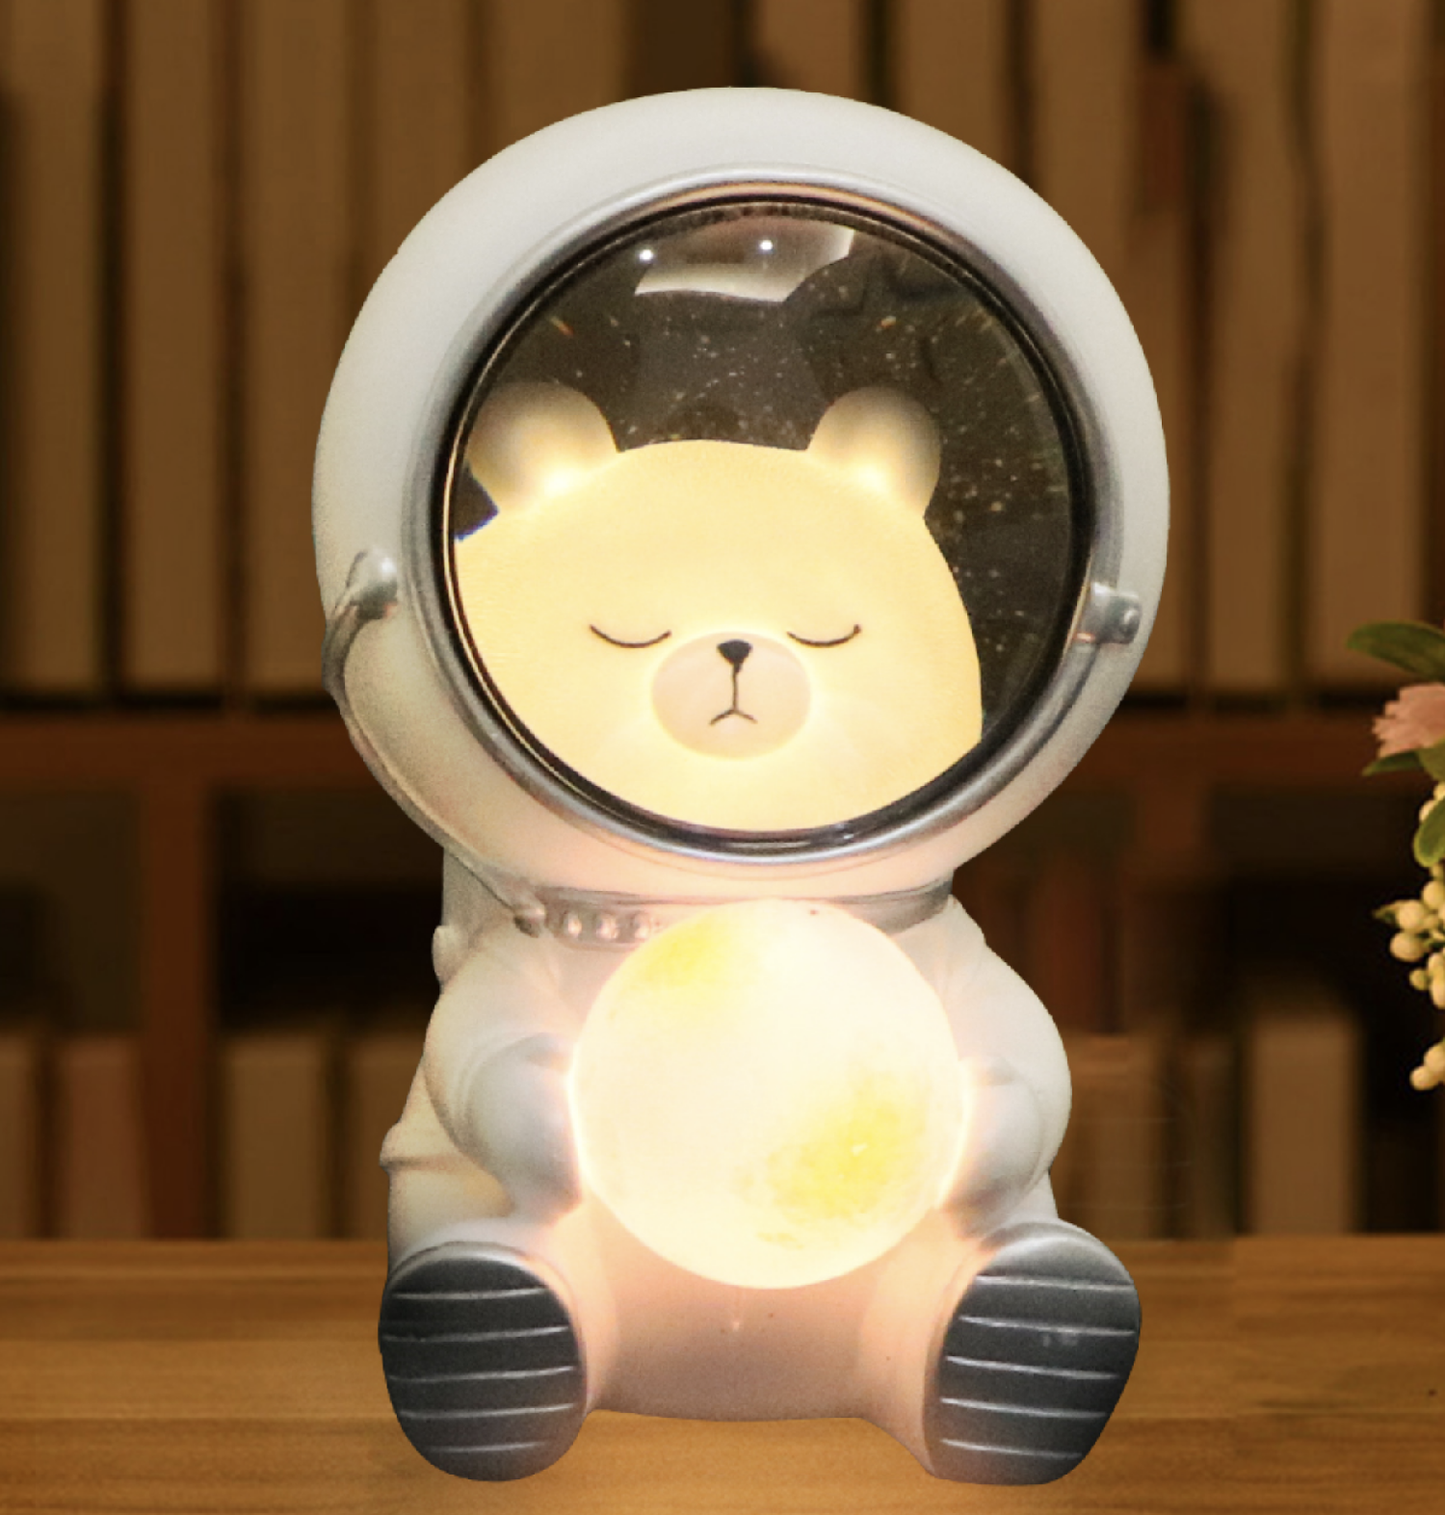 Cute Animal Astronaut Nightlight - Gattino, cucciolo o orso